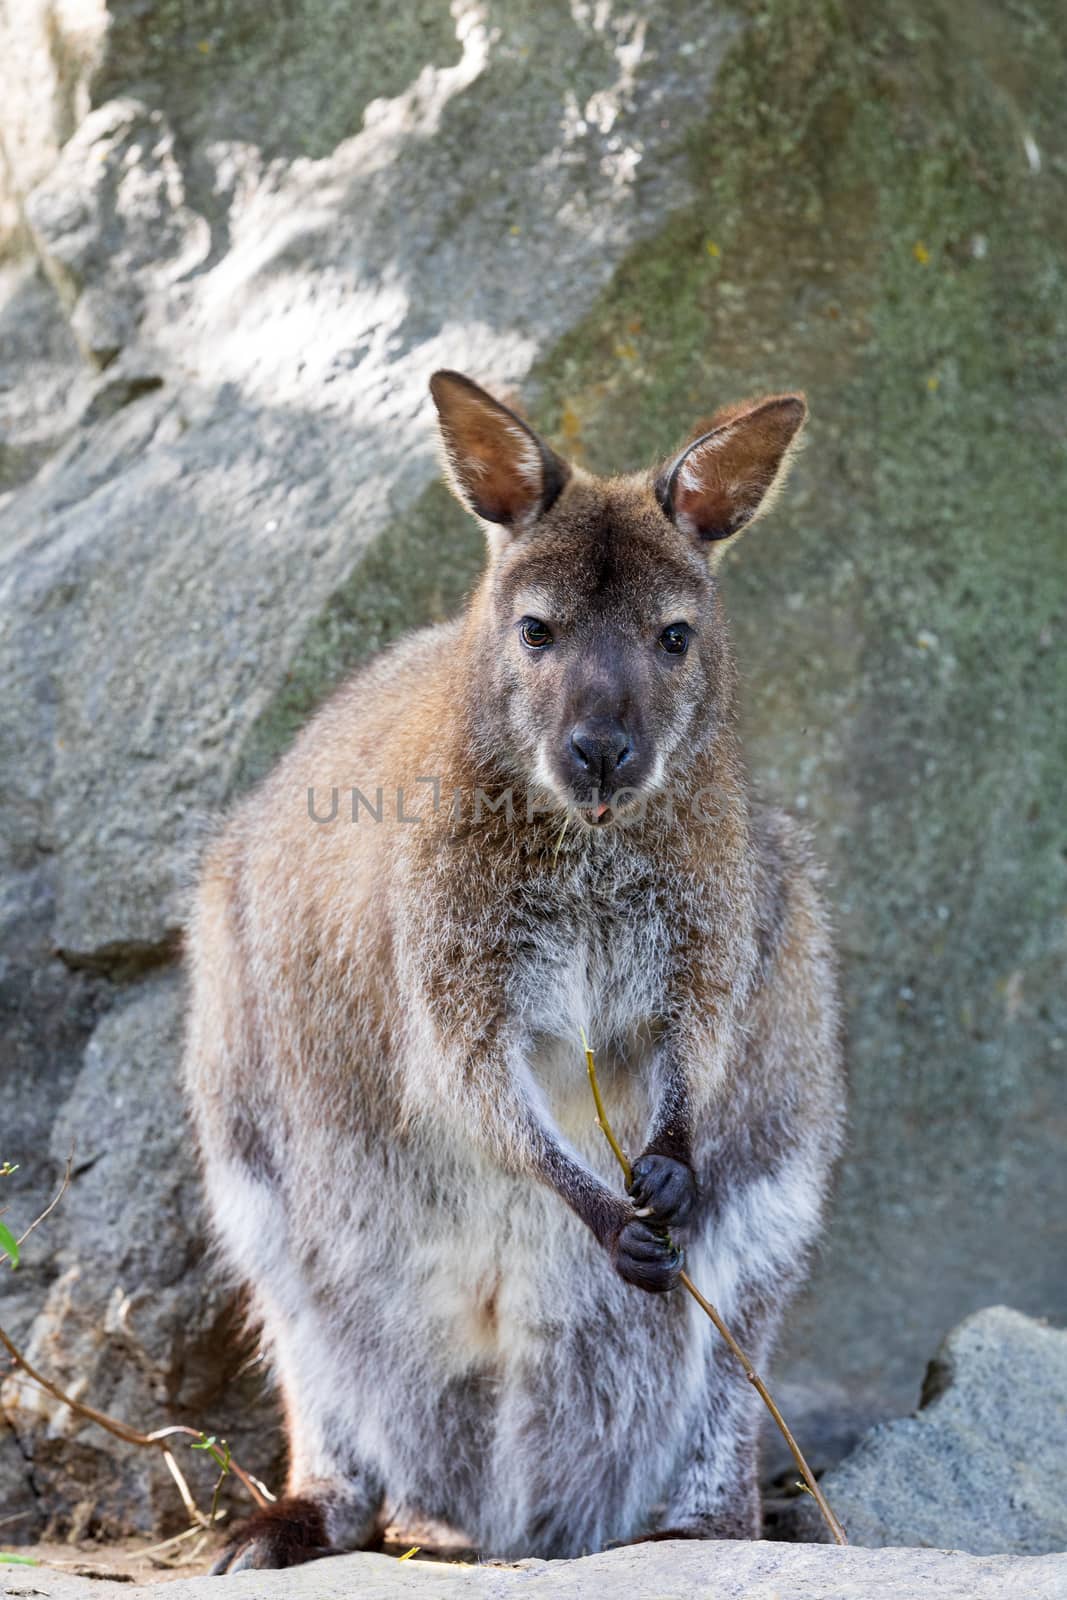 Red-necked Wallaby, australian kangaroo by artush